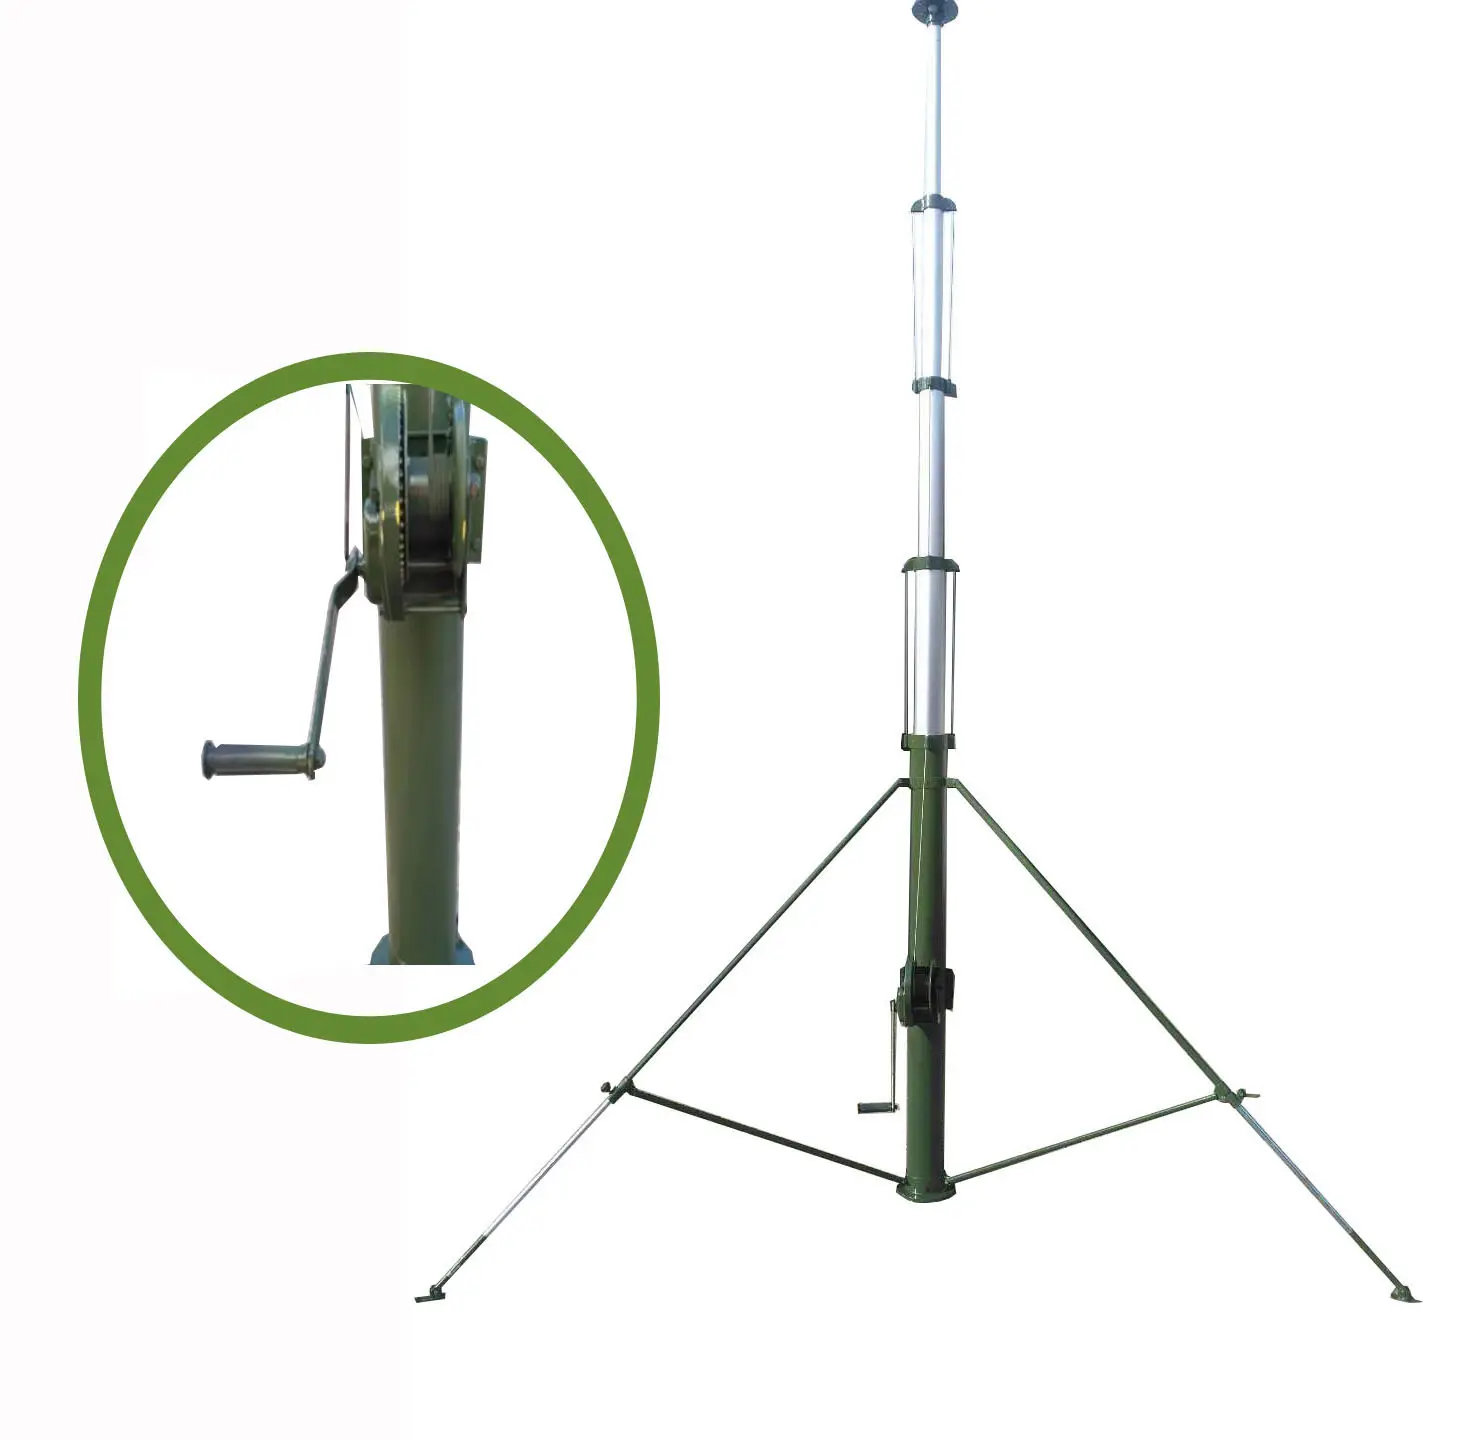 Factory outlet quick installation 12m telescopic mast pole hand crank mast manual telescoping pole